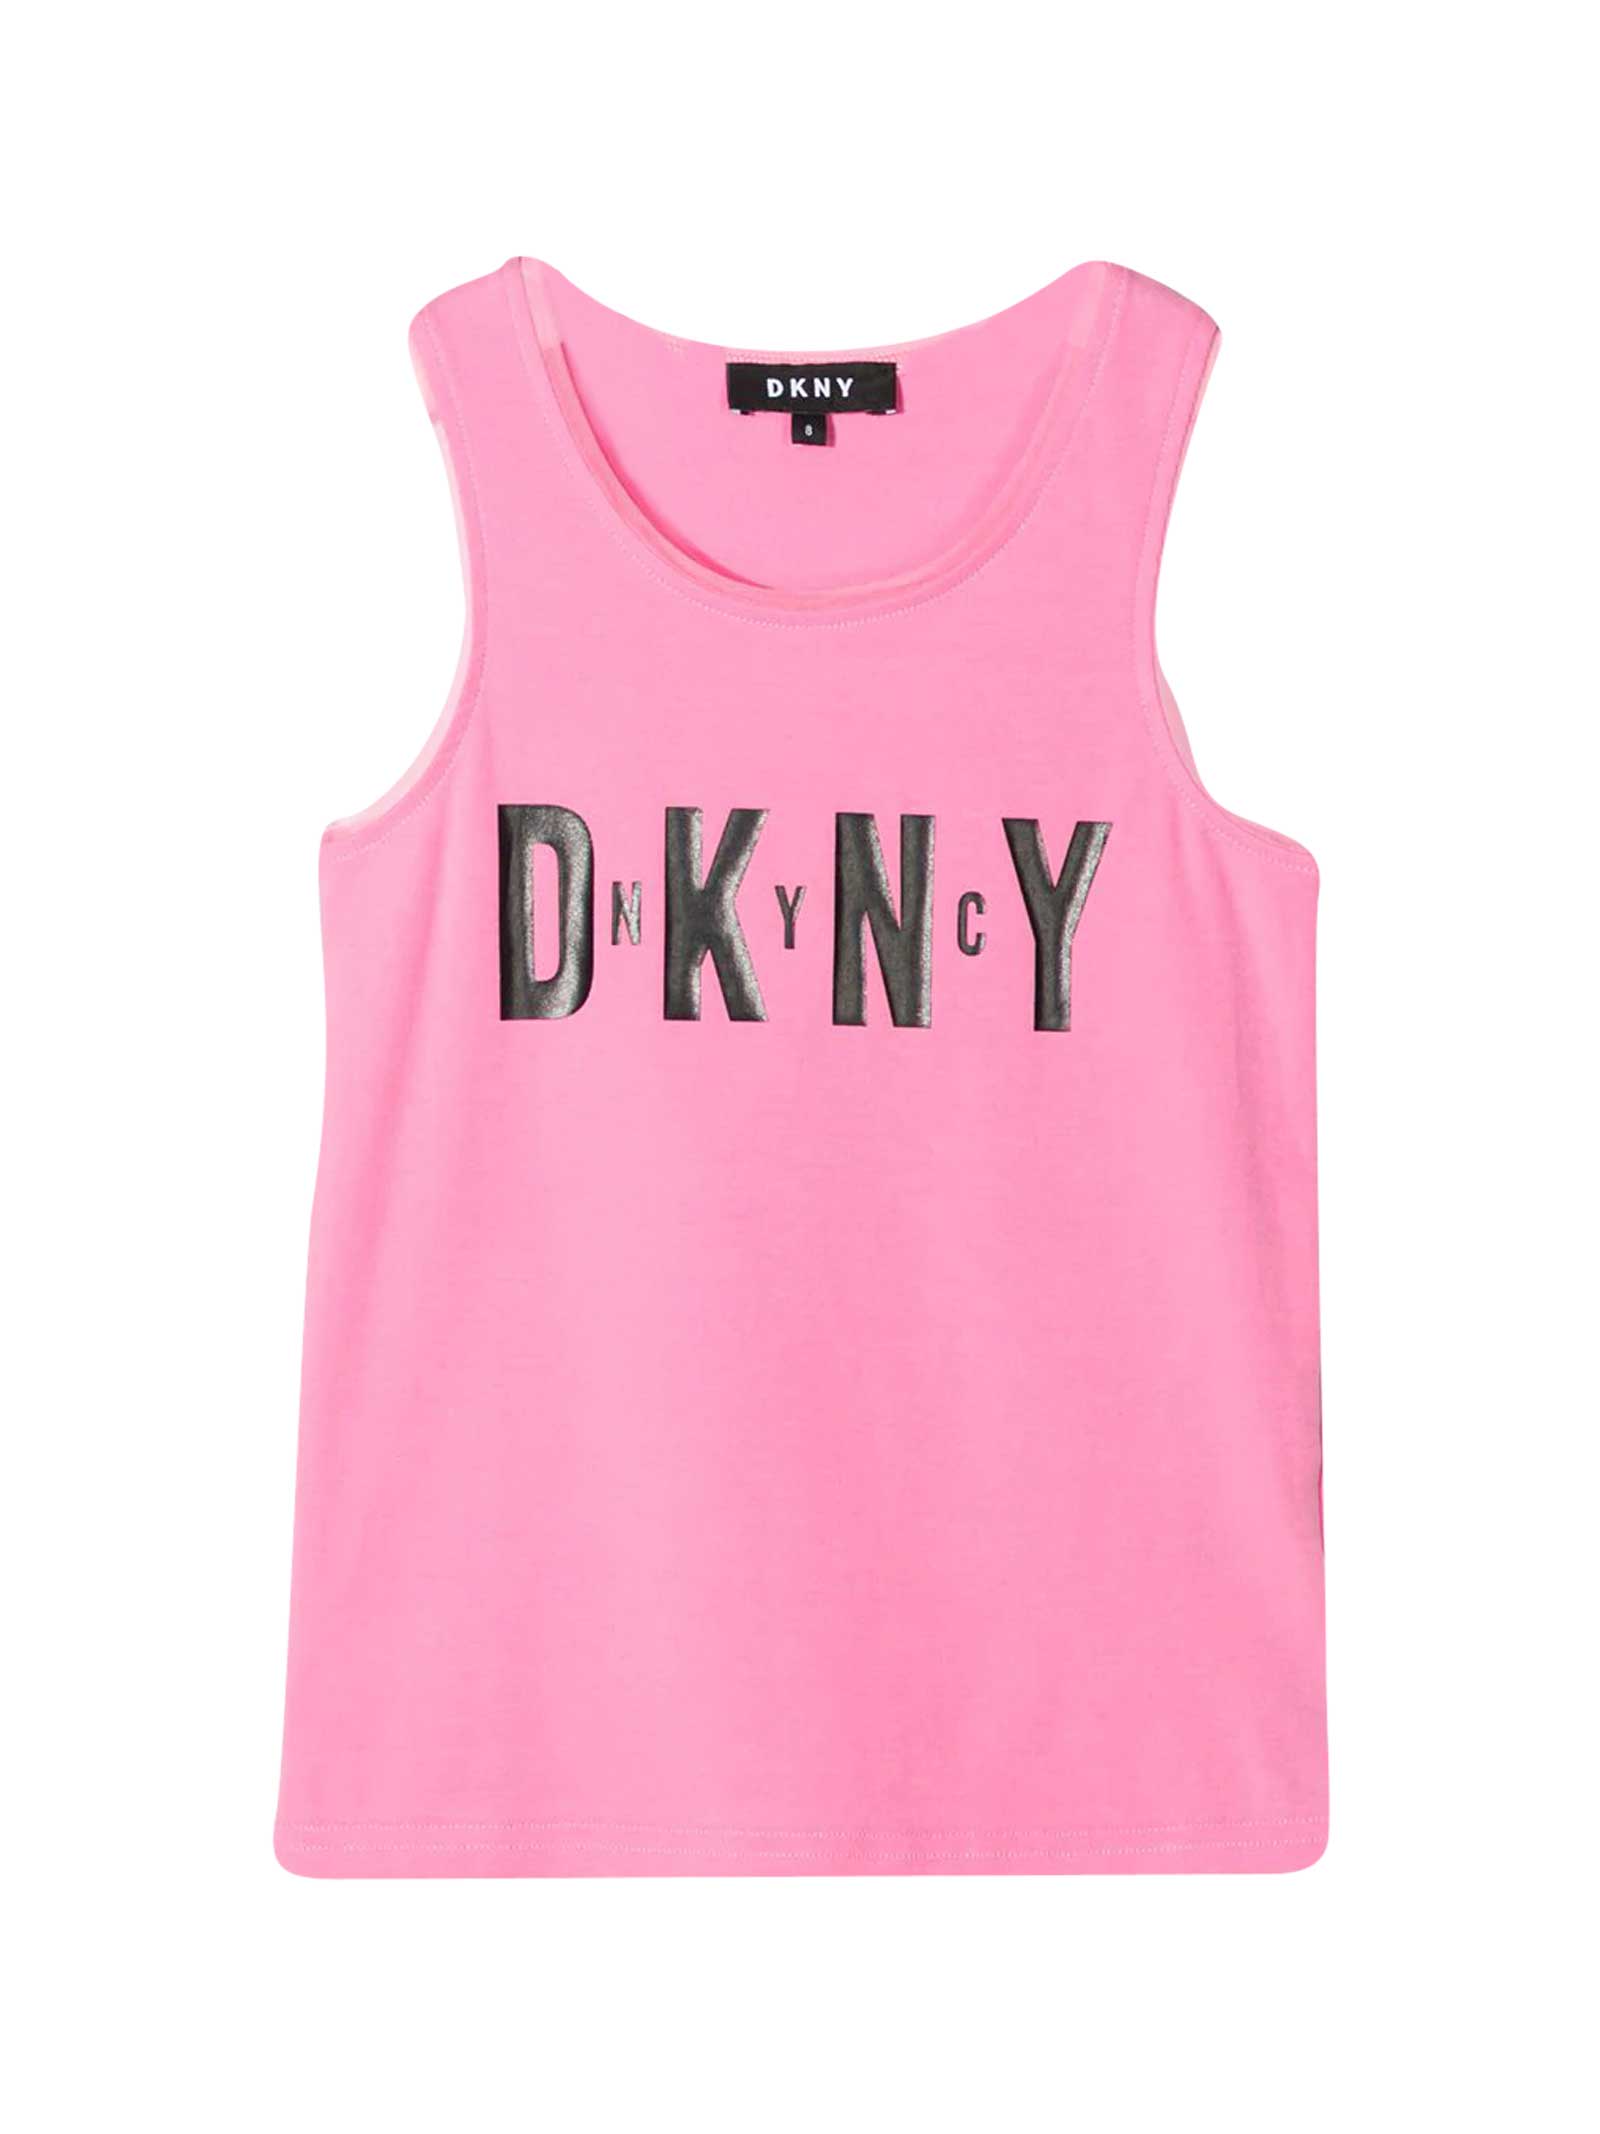 DKNY Pink Teen Tank Top